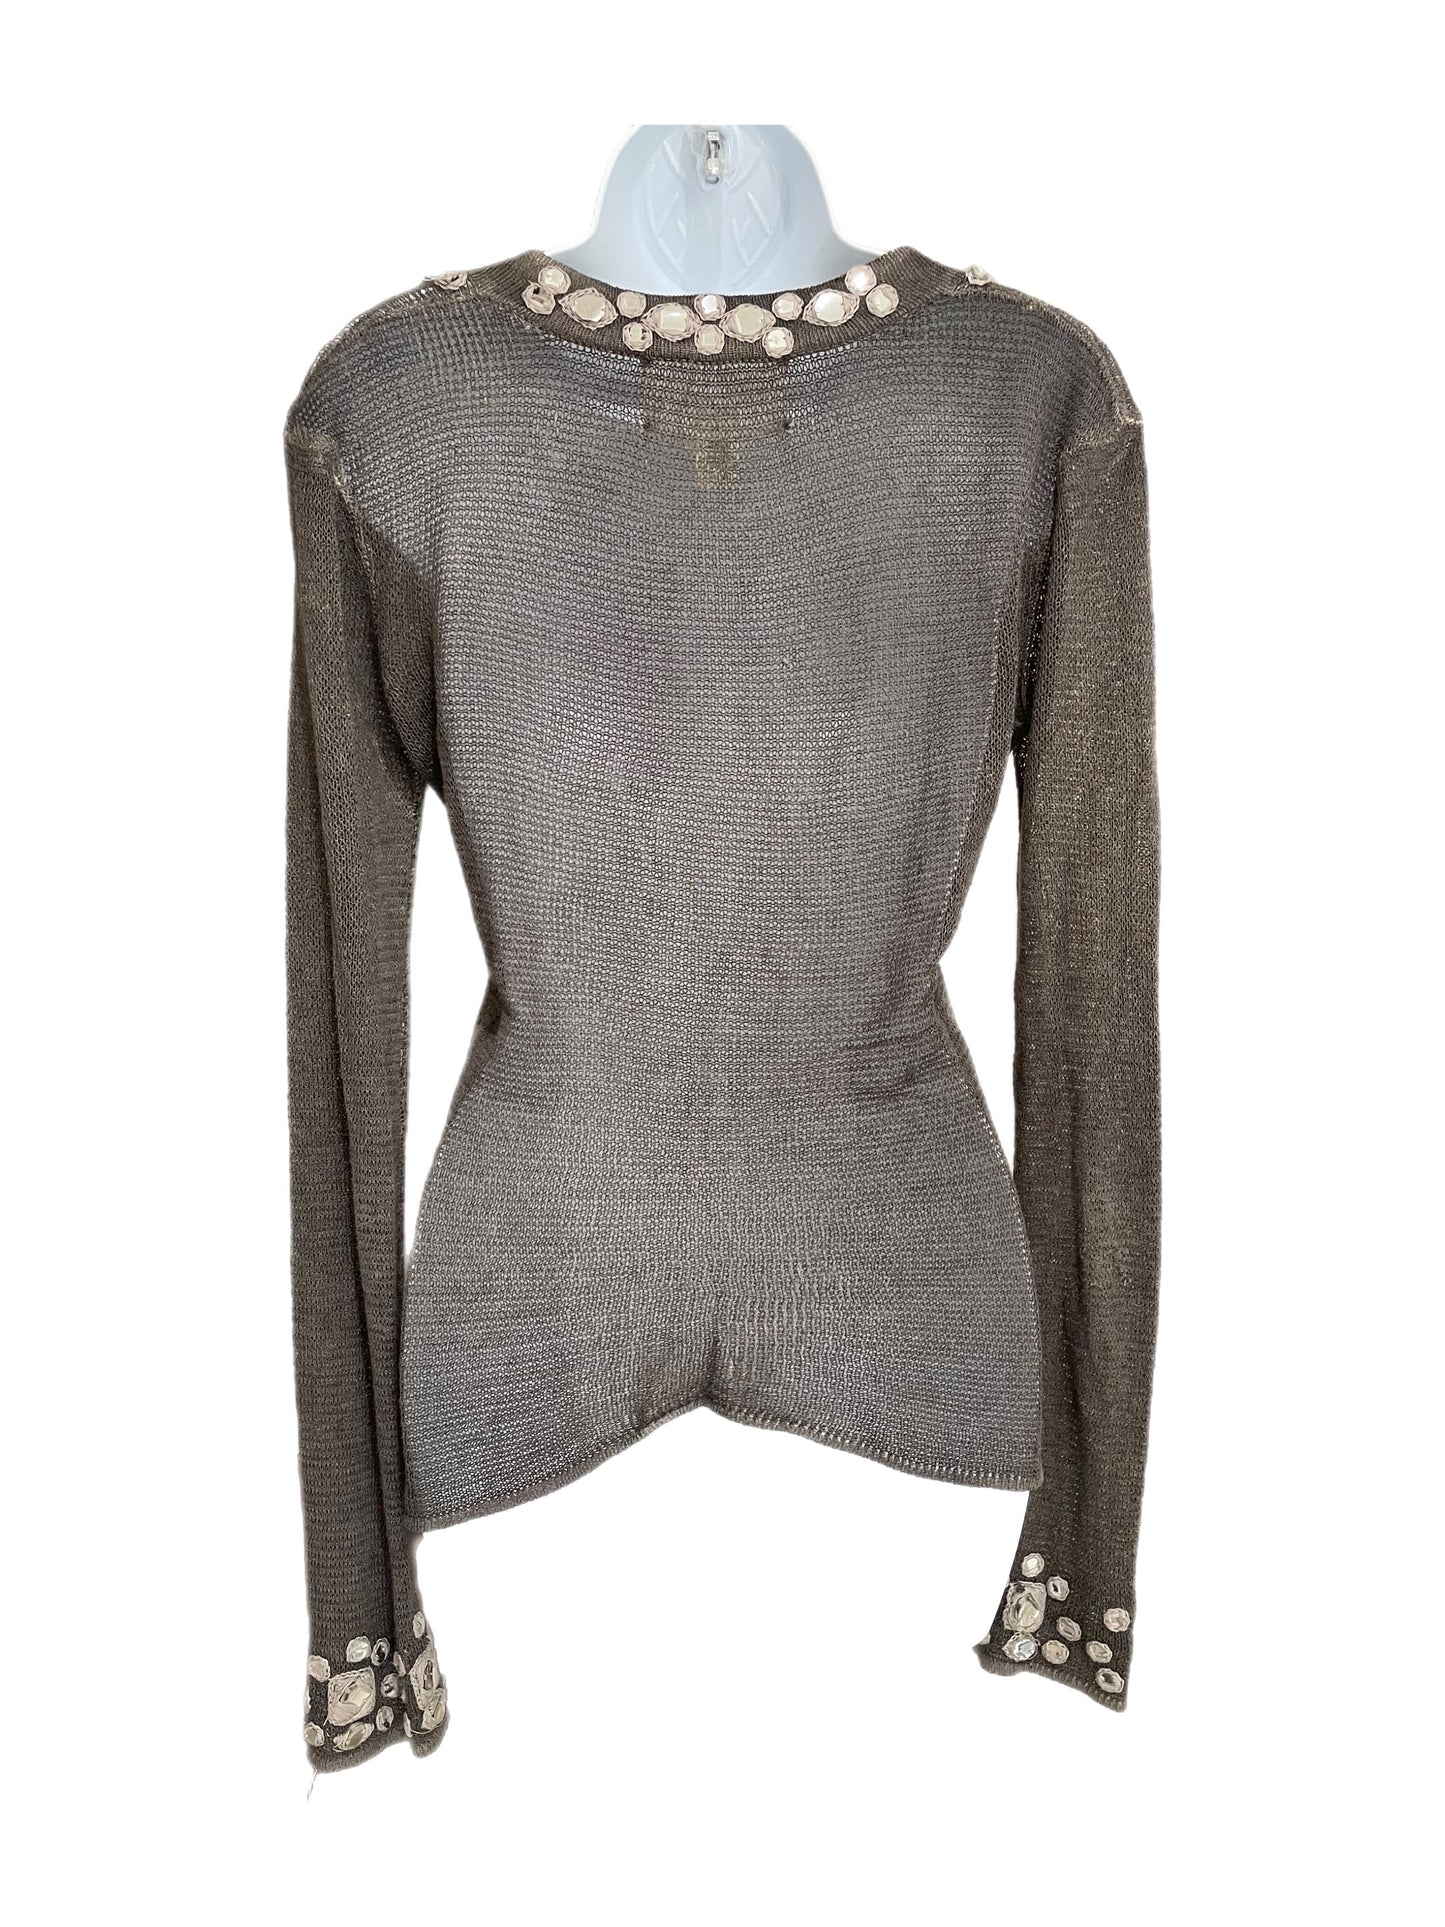 Shirt-Long Sleeve Embellished Raglan Design-Gray Coloring-Silk & Linen Material-By Ya-Ya